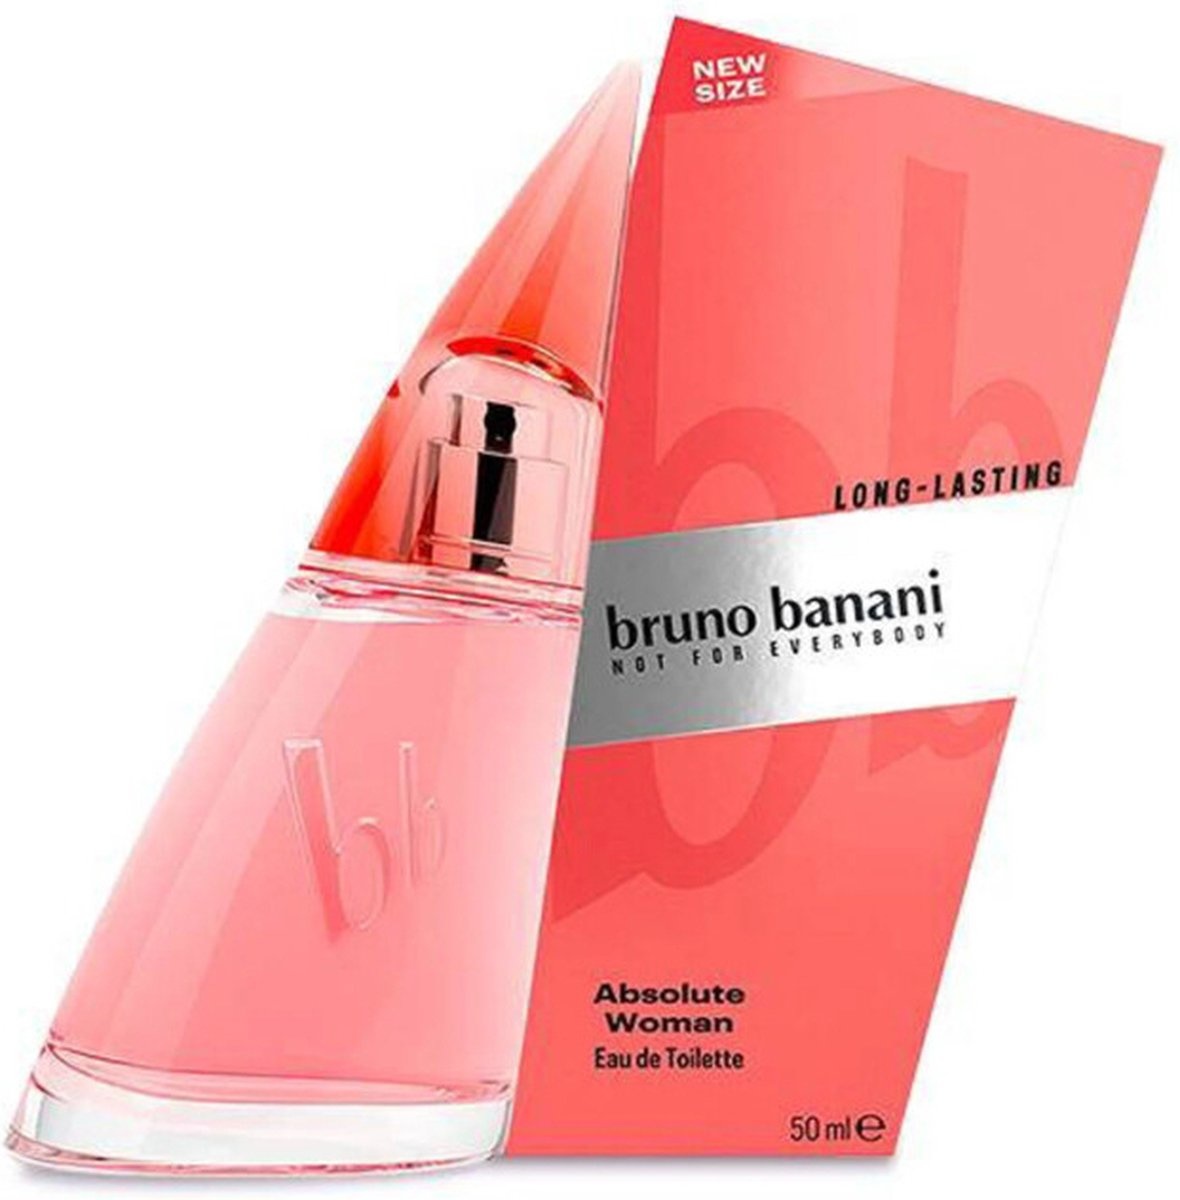 Bruno Banani Absolute Woman Eau de Toilette Spray - 50 ml - Packaging damaged